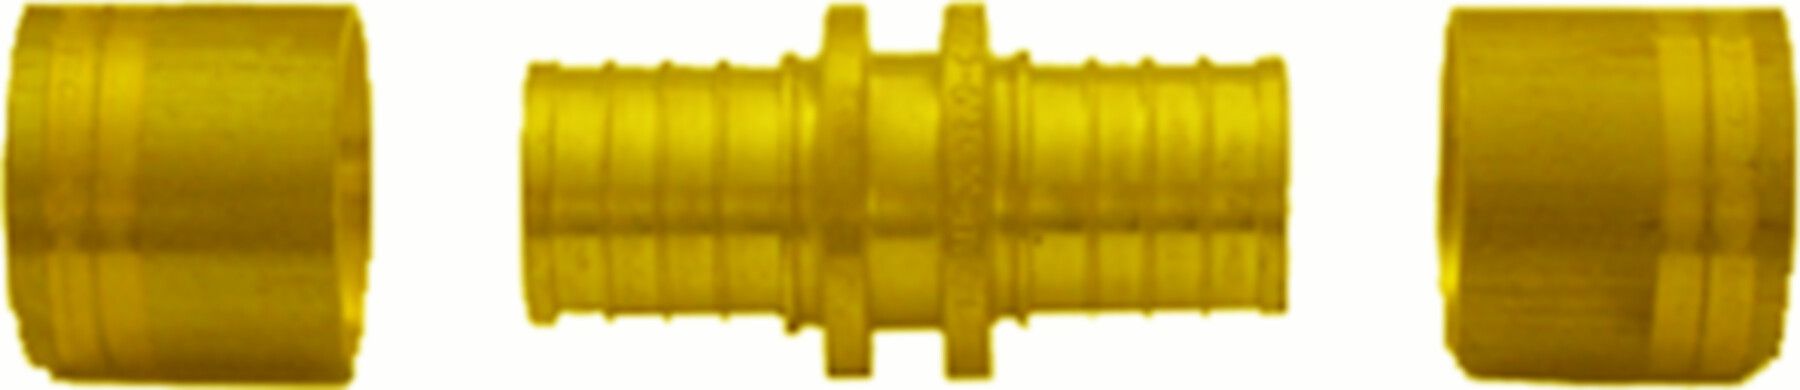 Press-Verbindungskupplung PVK egal S - 50 ø 50/6.9 mm - Isopex Fernwärmeleitung